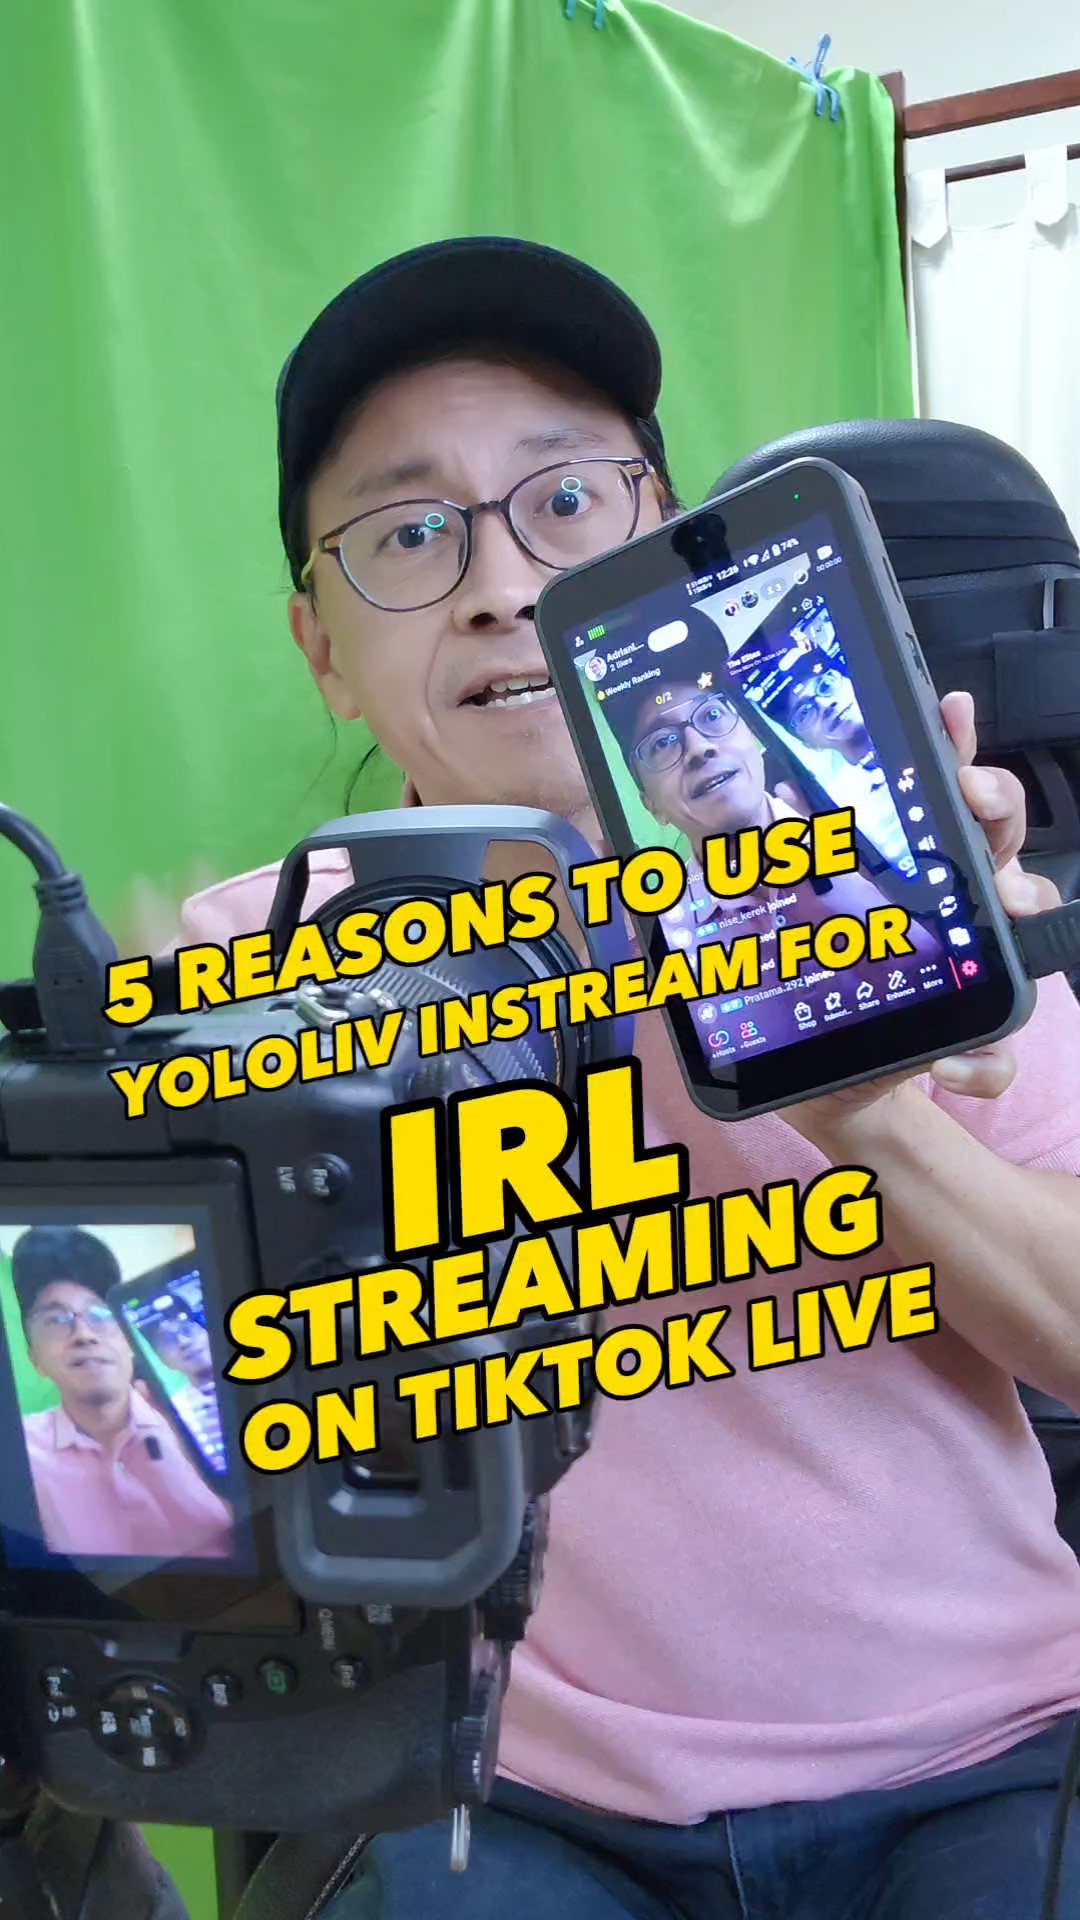 Get Yololiv Instream For IRL Streaming on Tiktok Live